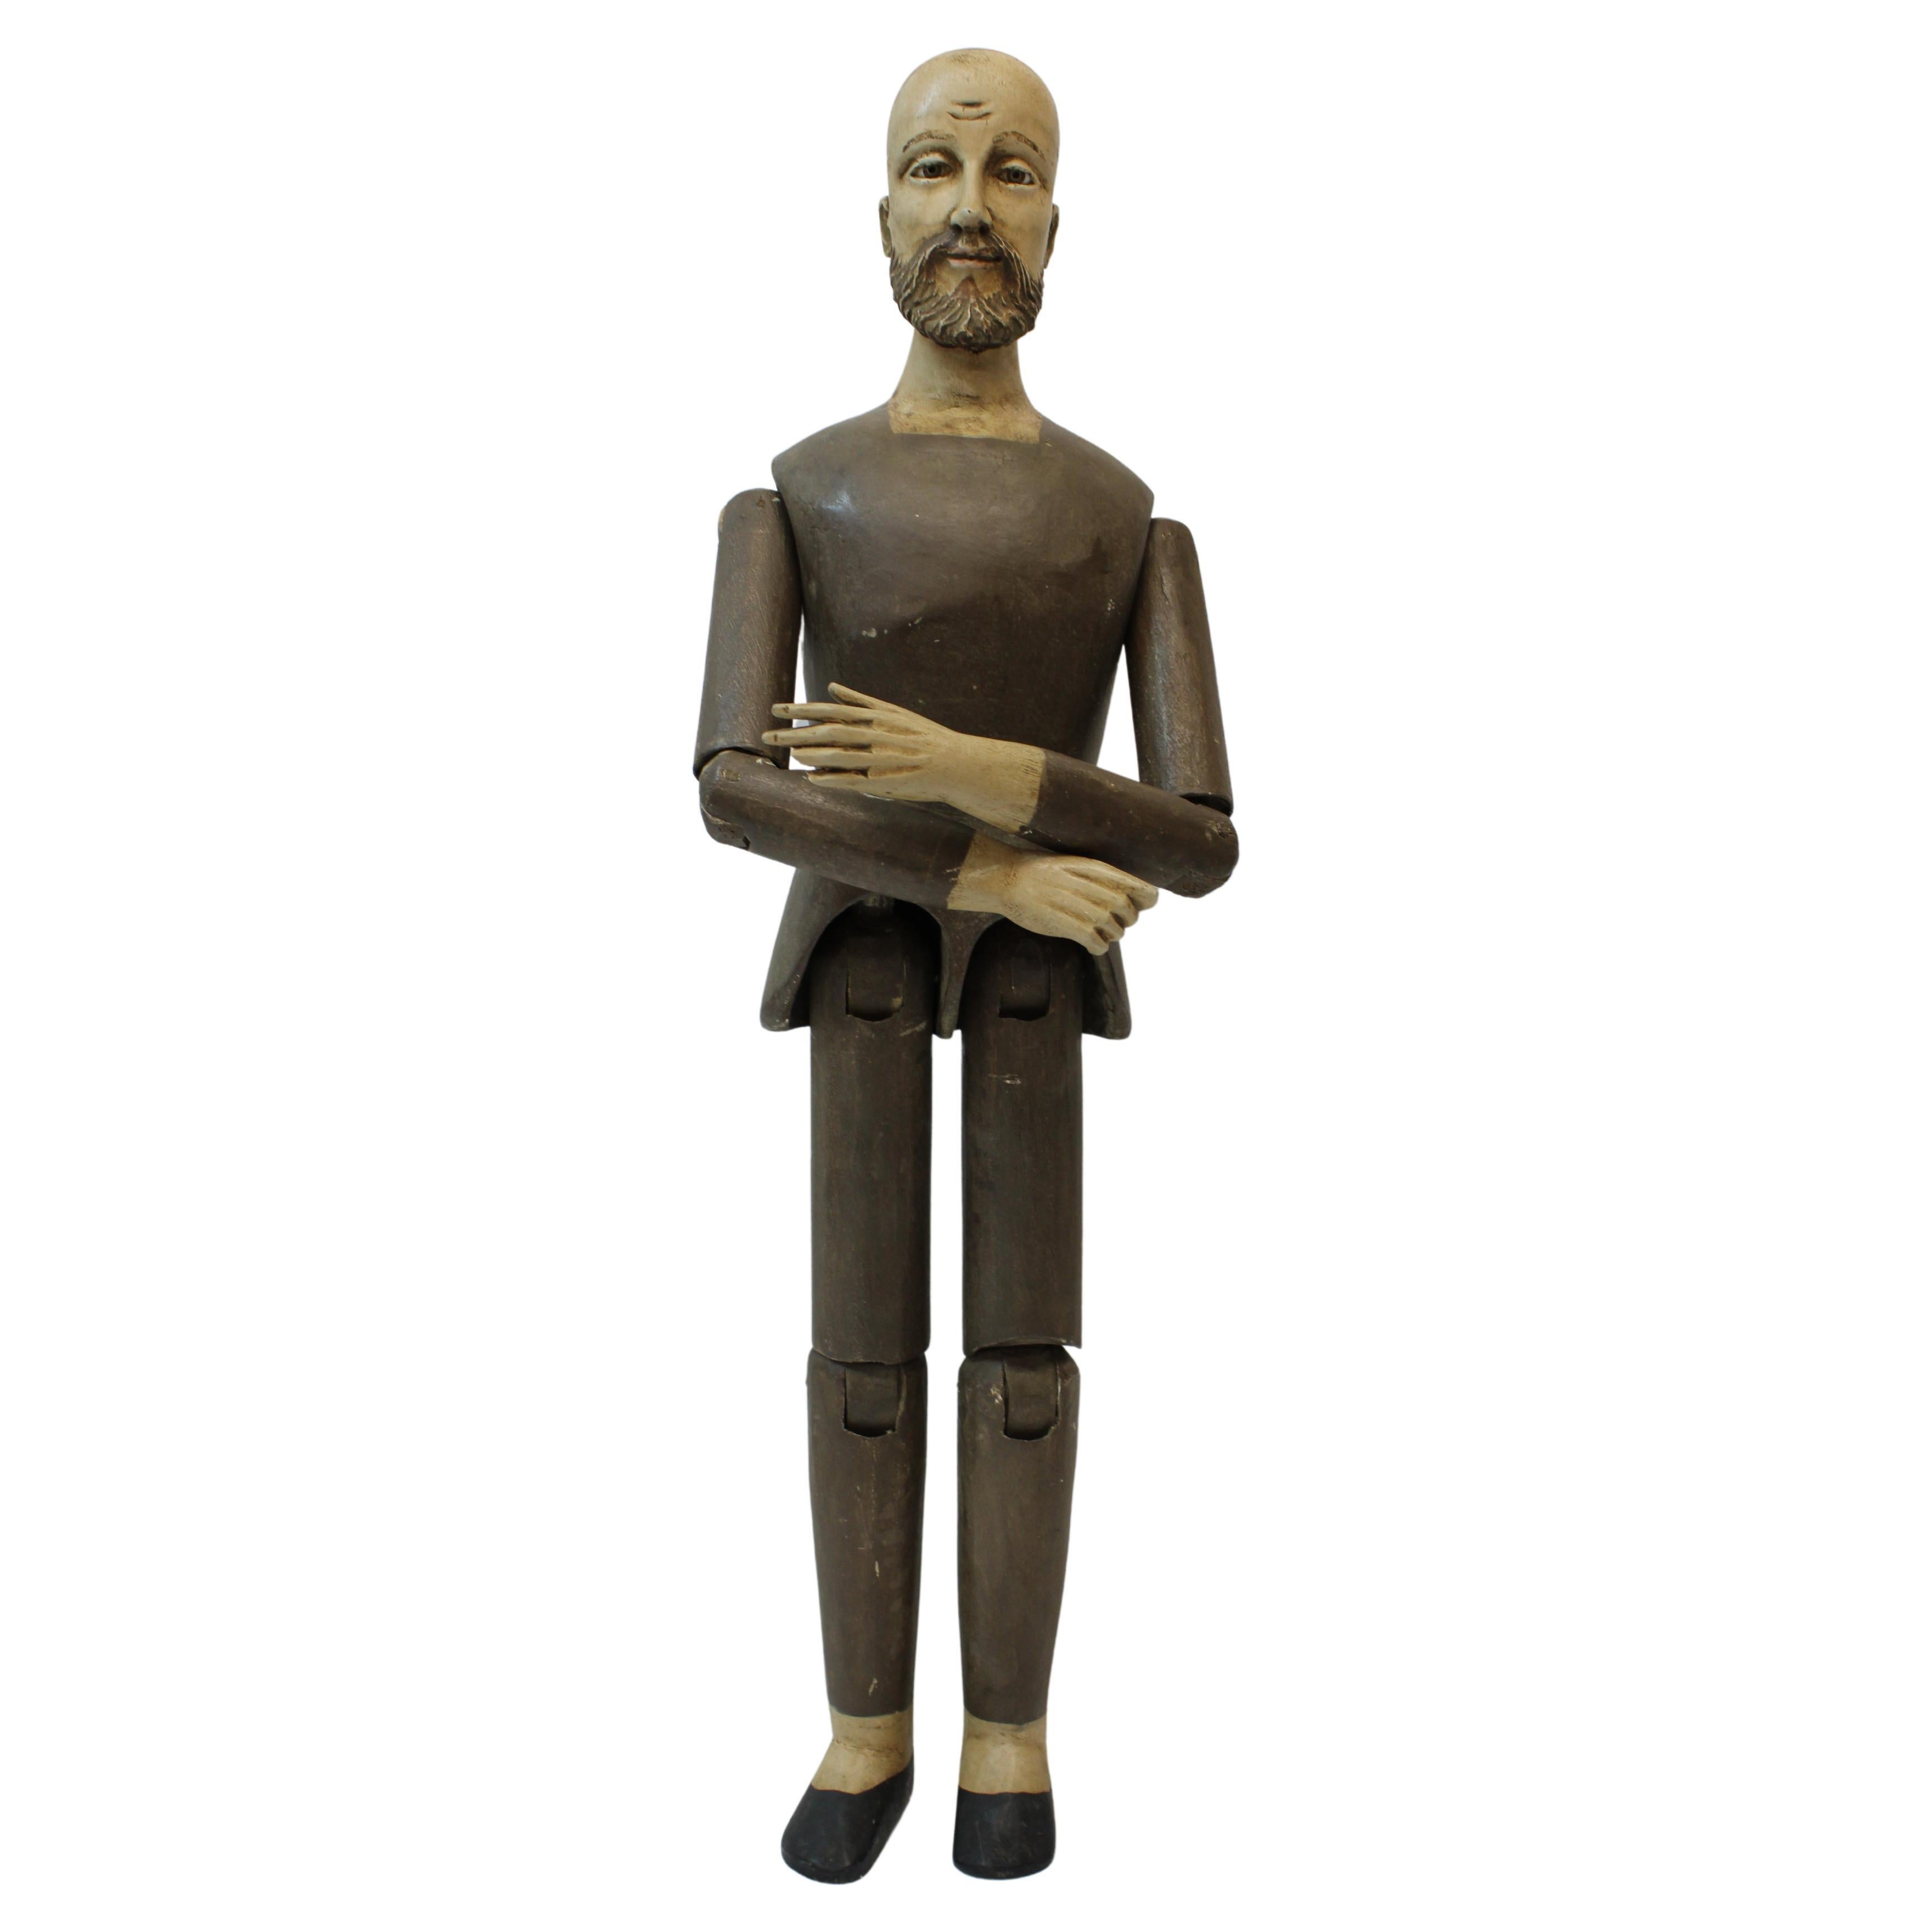 European Articulated Wood Figure "Giuseppe"